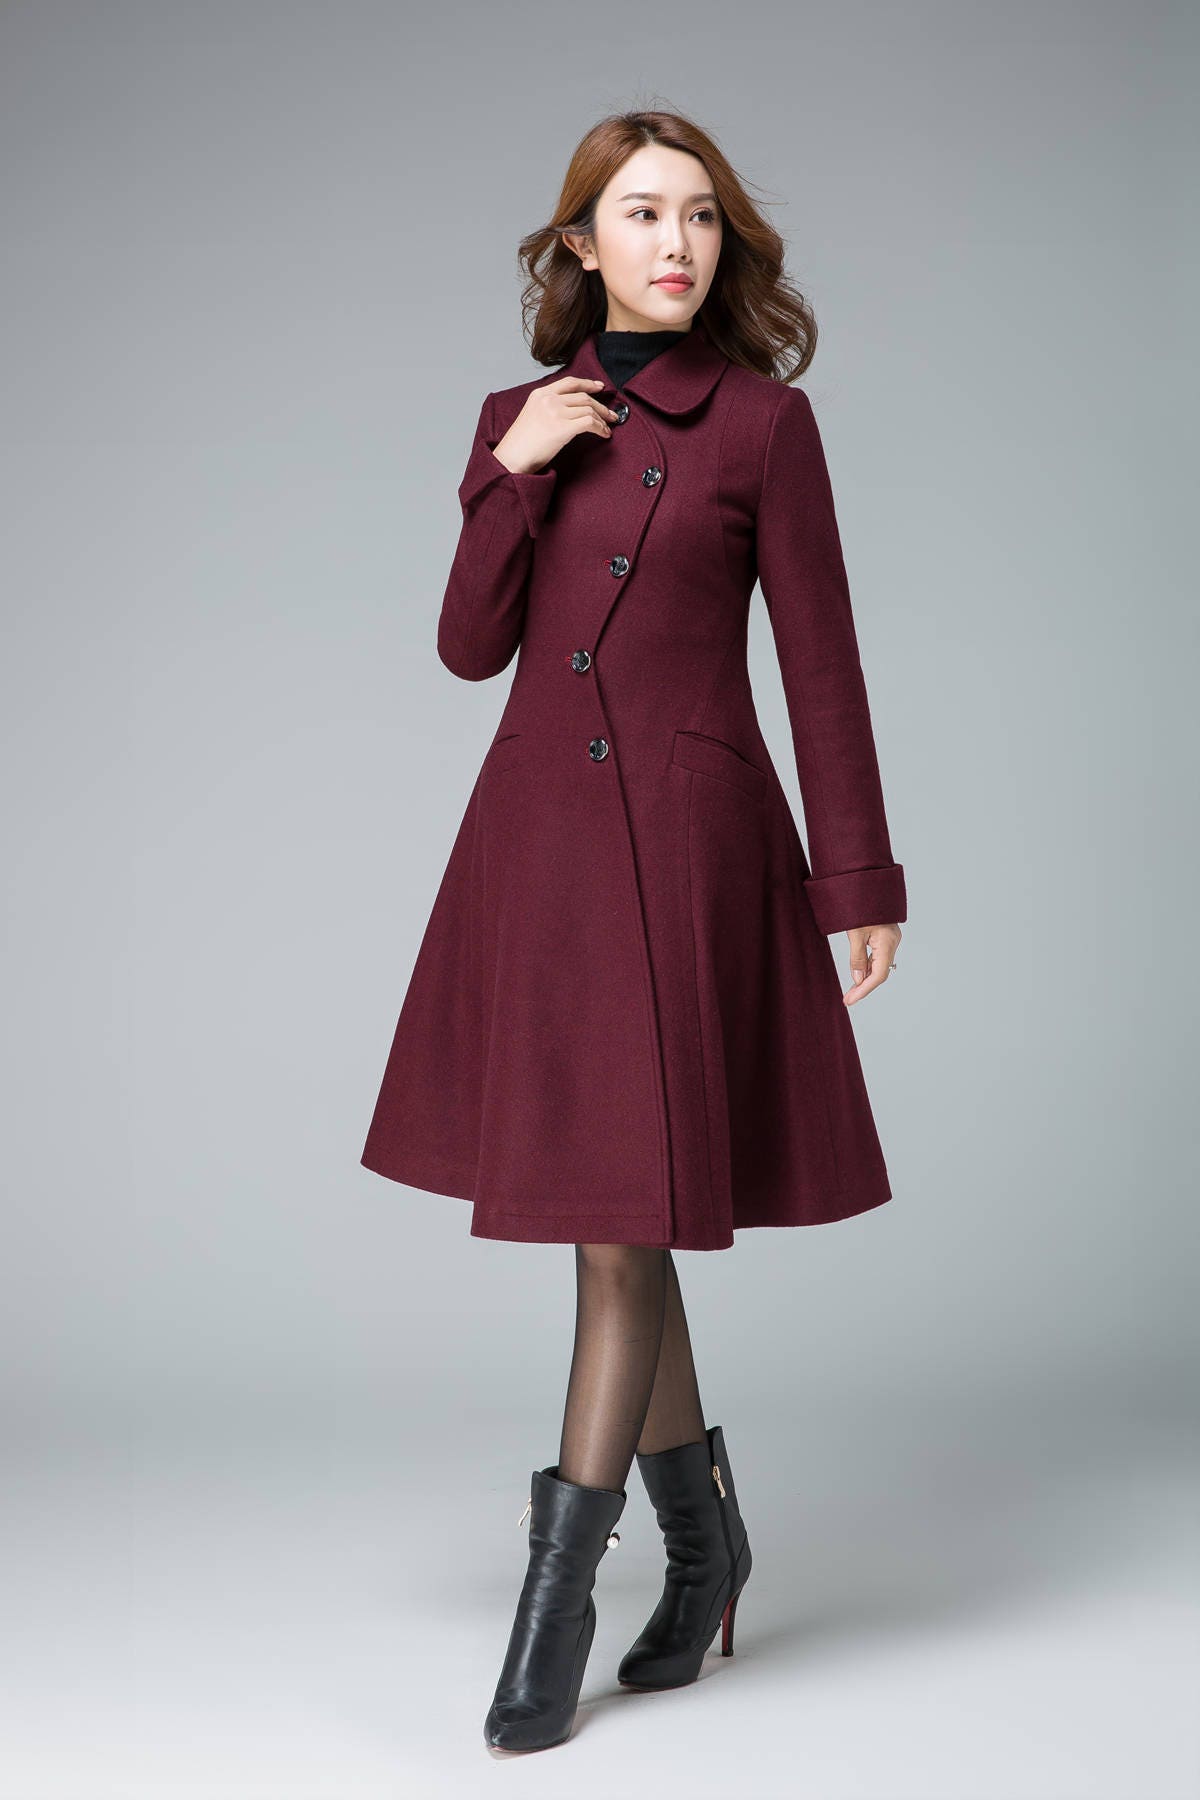 Retro wool coat coat jacket wine red wool coat wool coat | Etsy